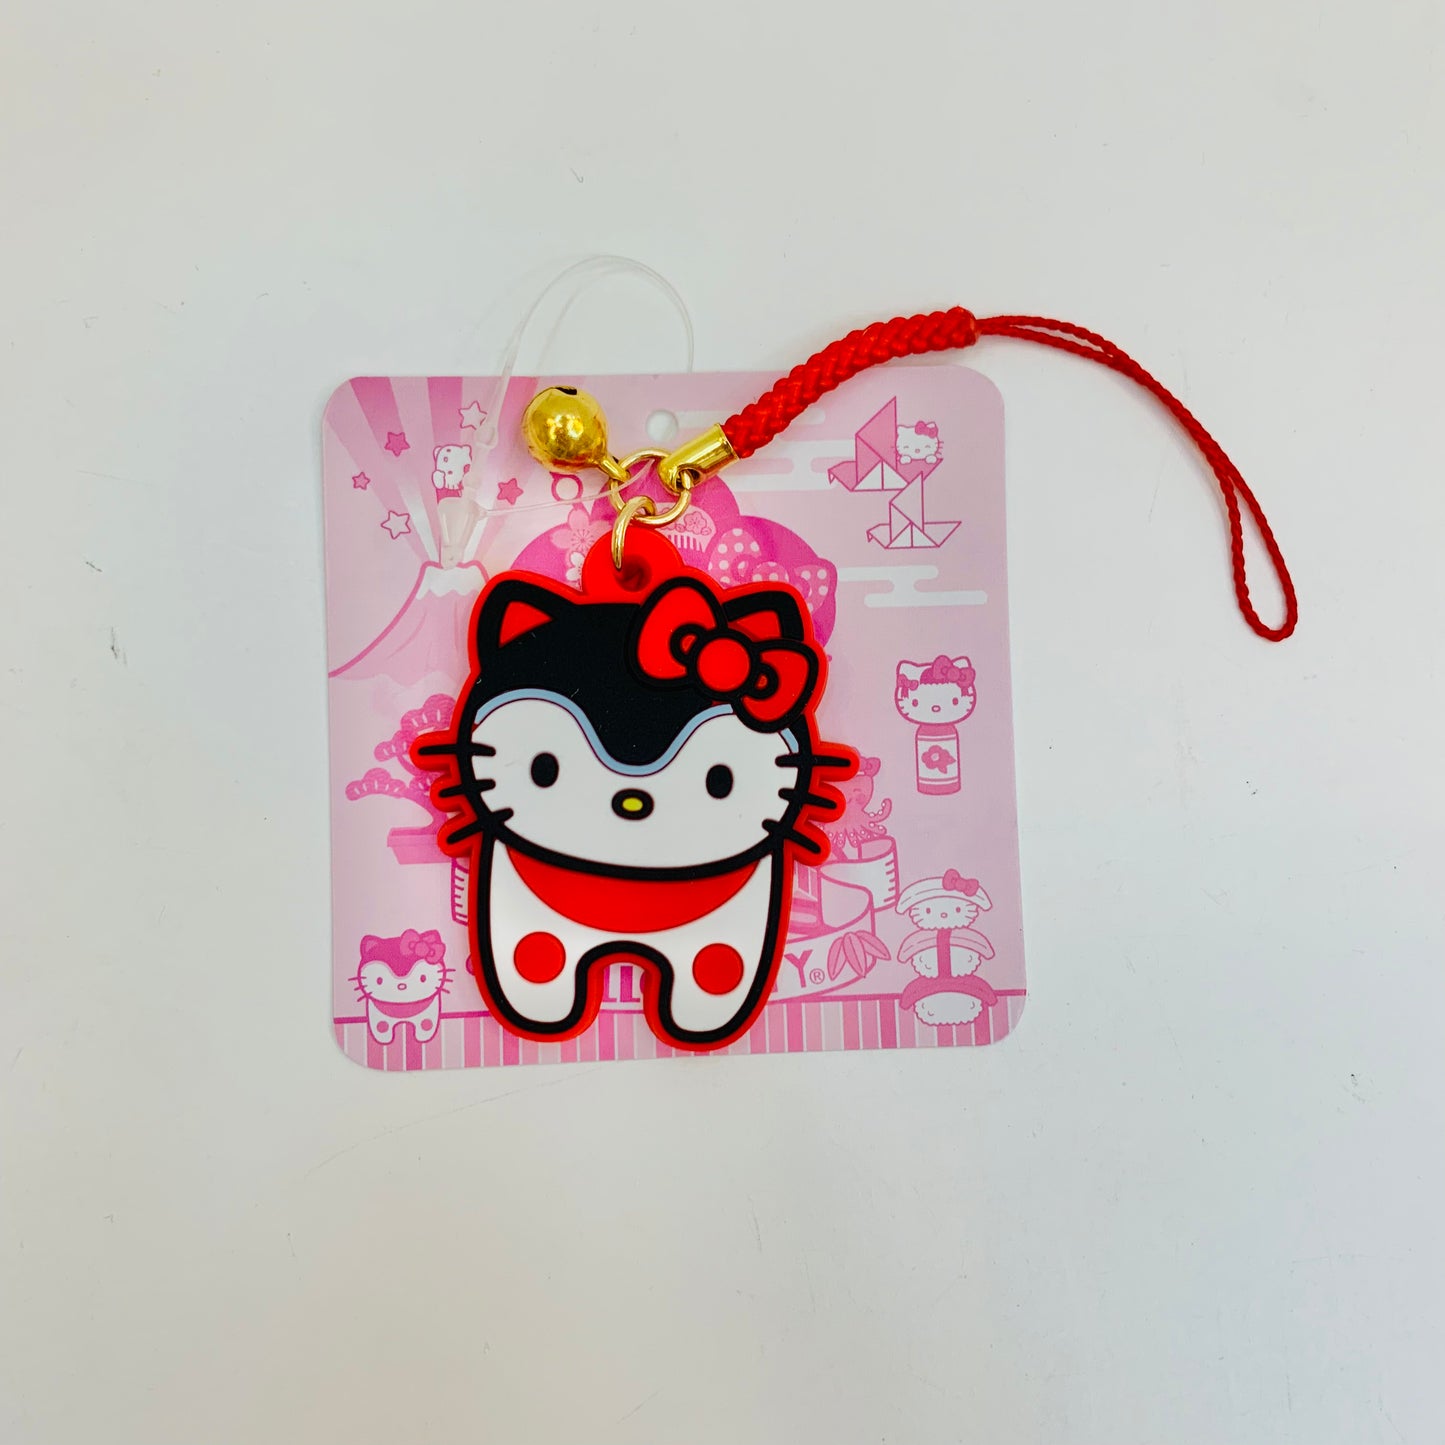 Hello Kitty Japan Pop PVC Mascot Ornament